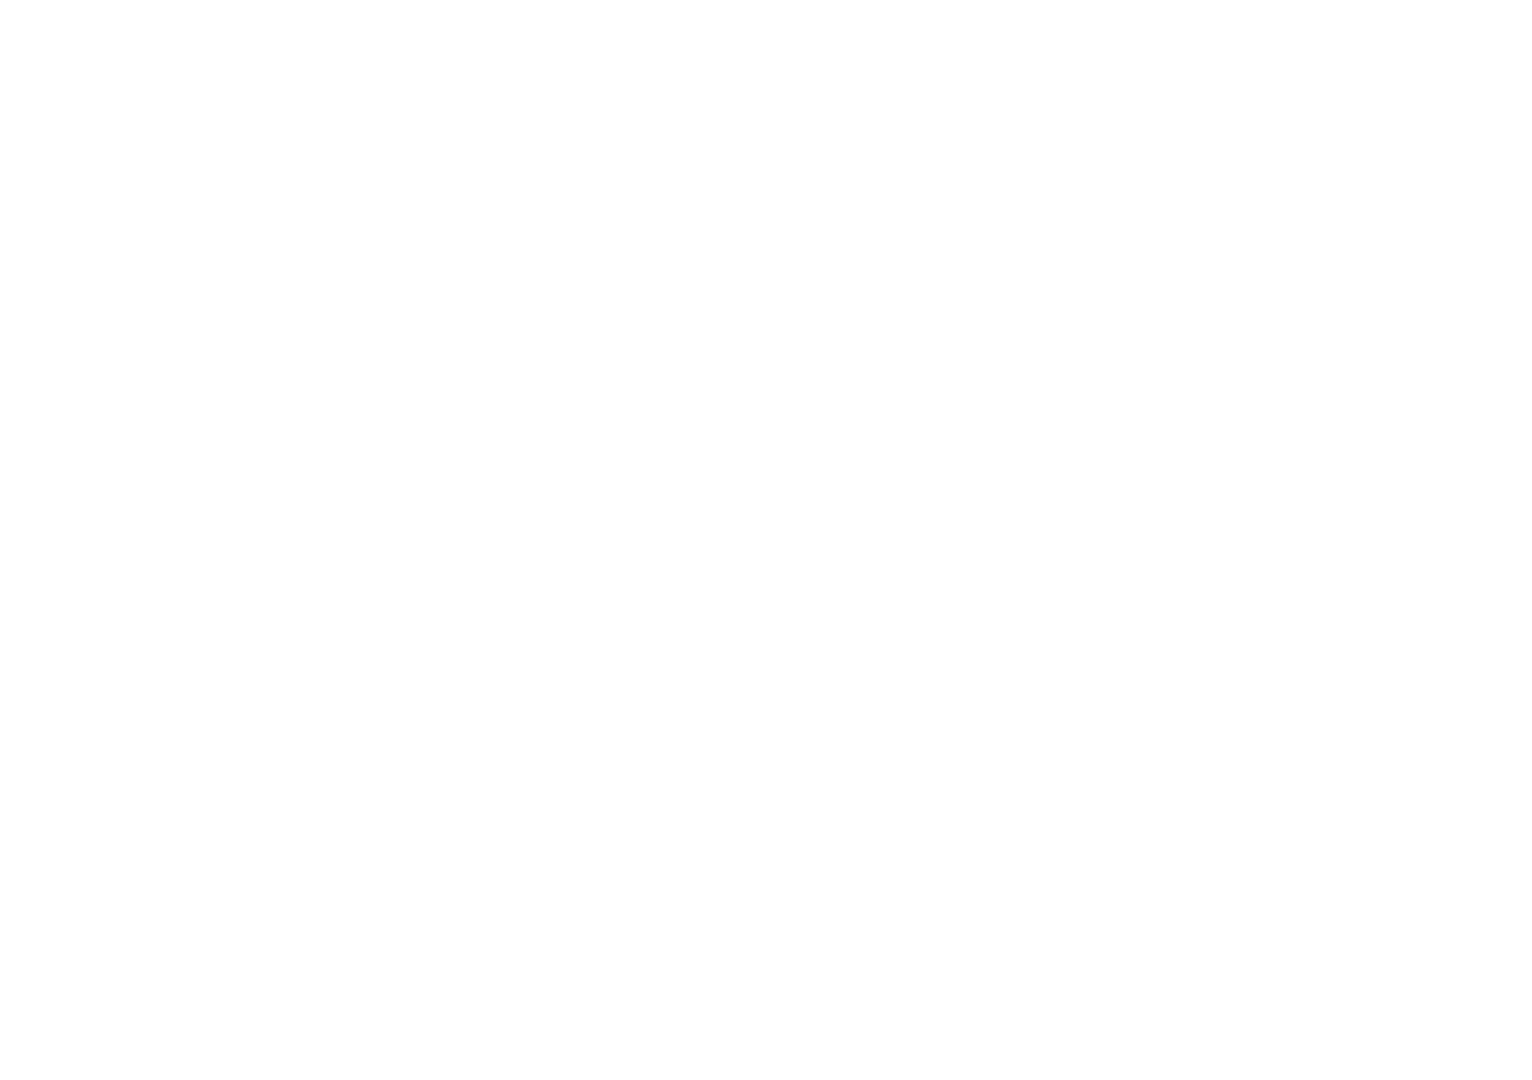 Our Little Studio